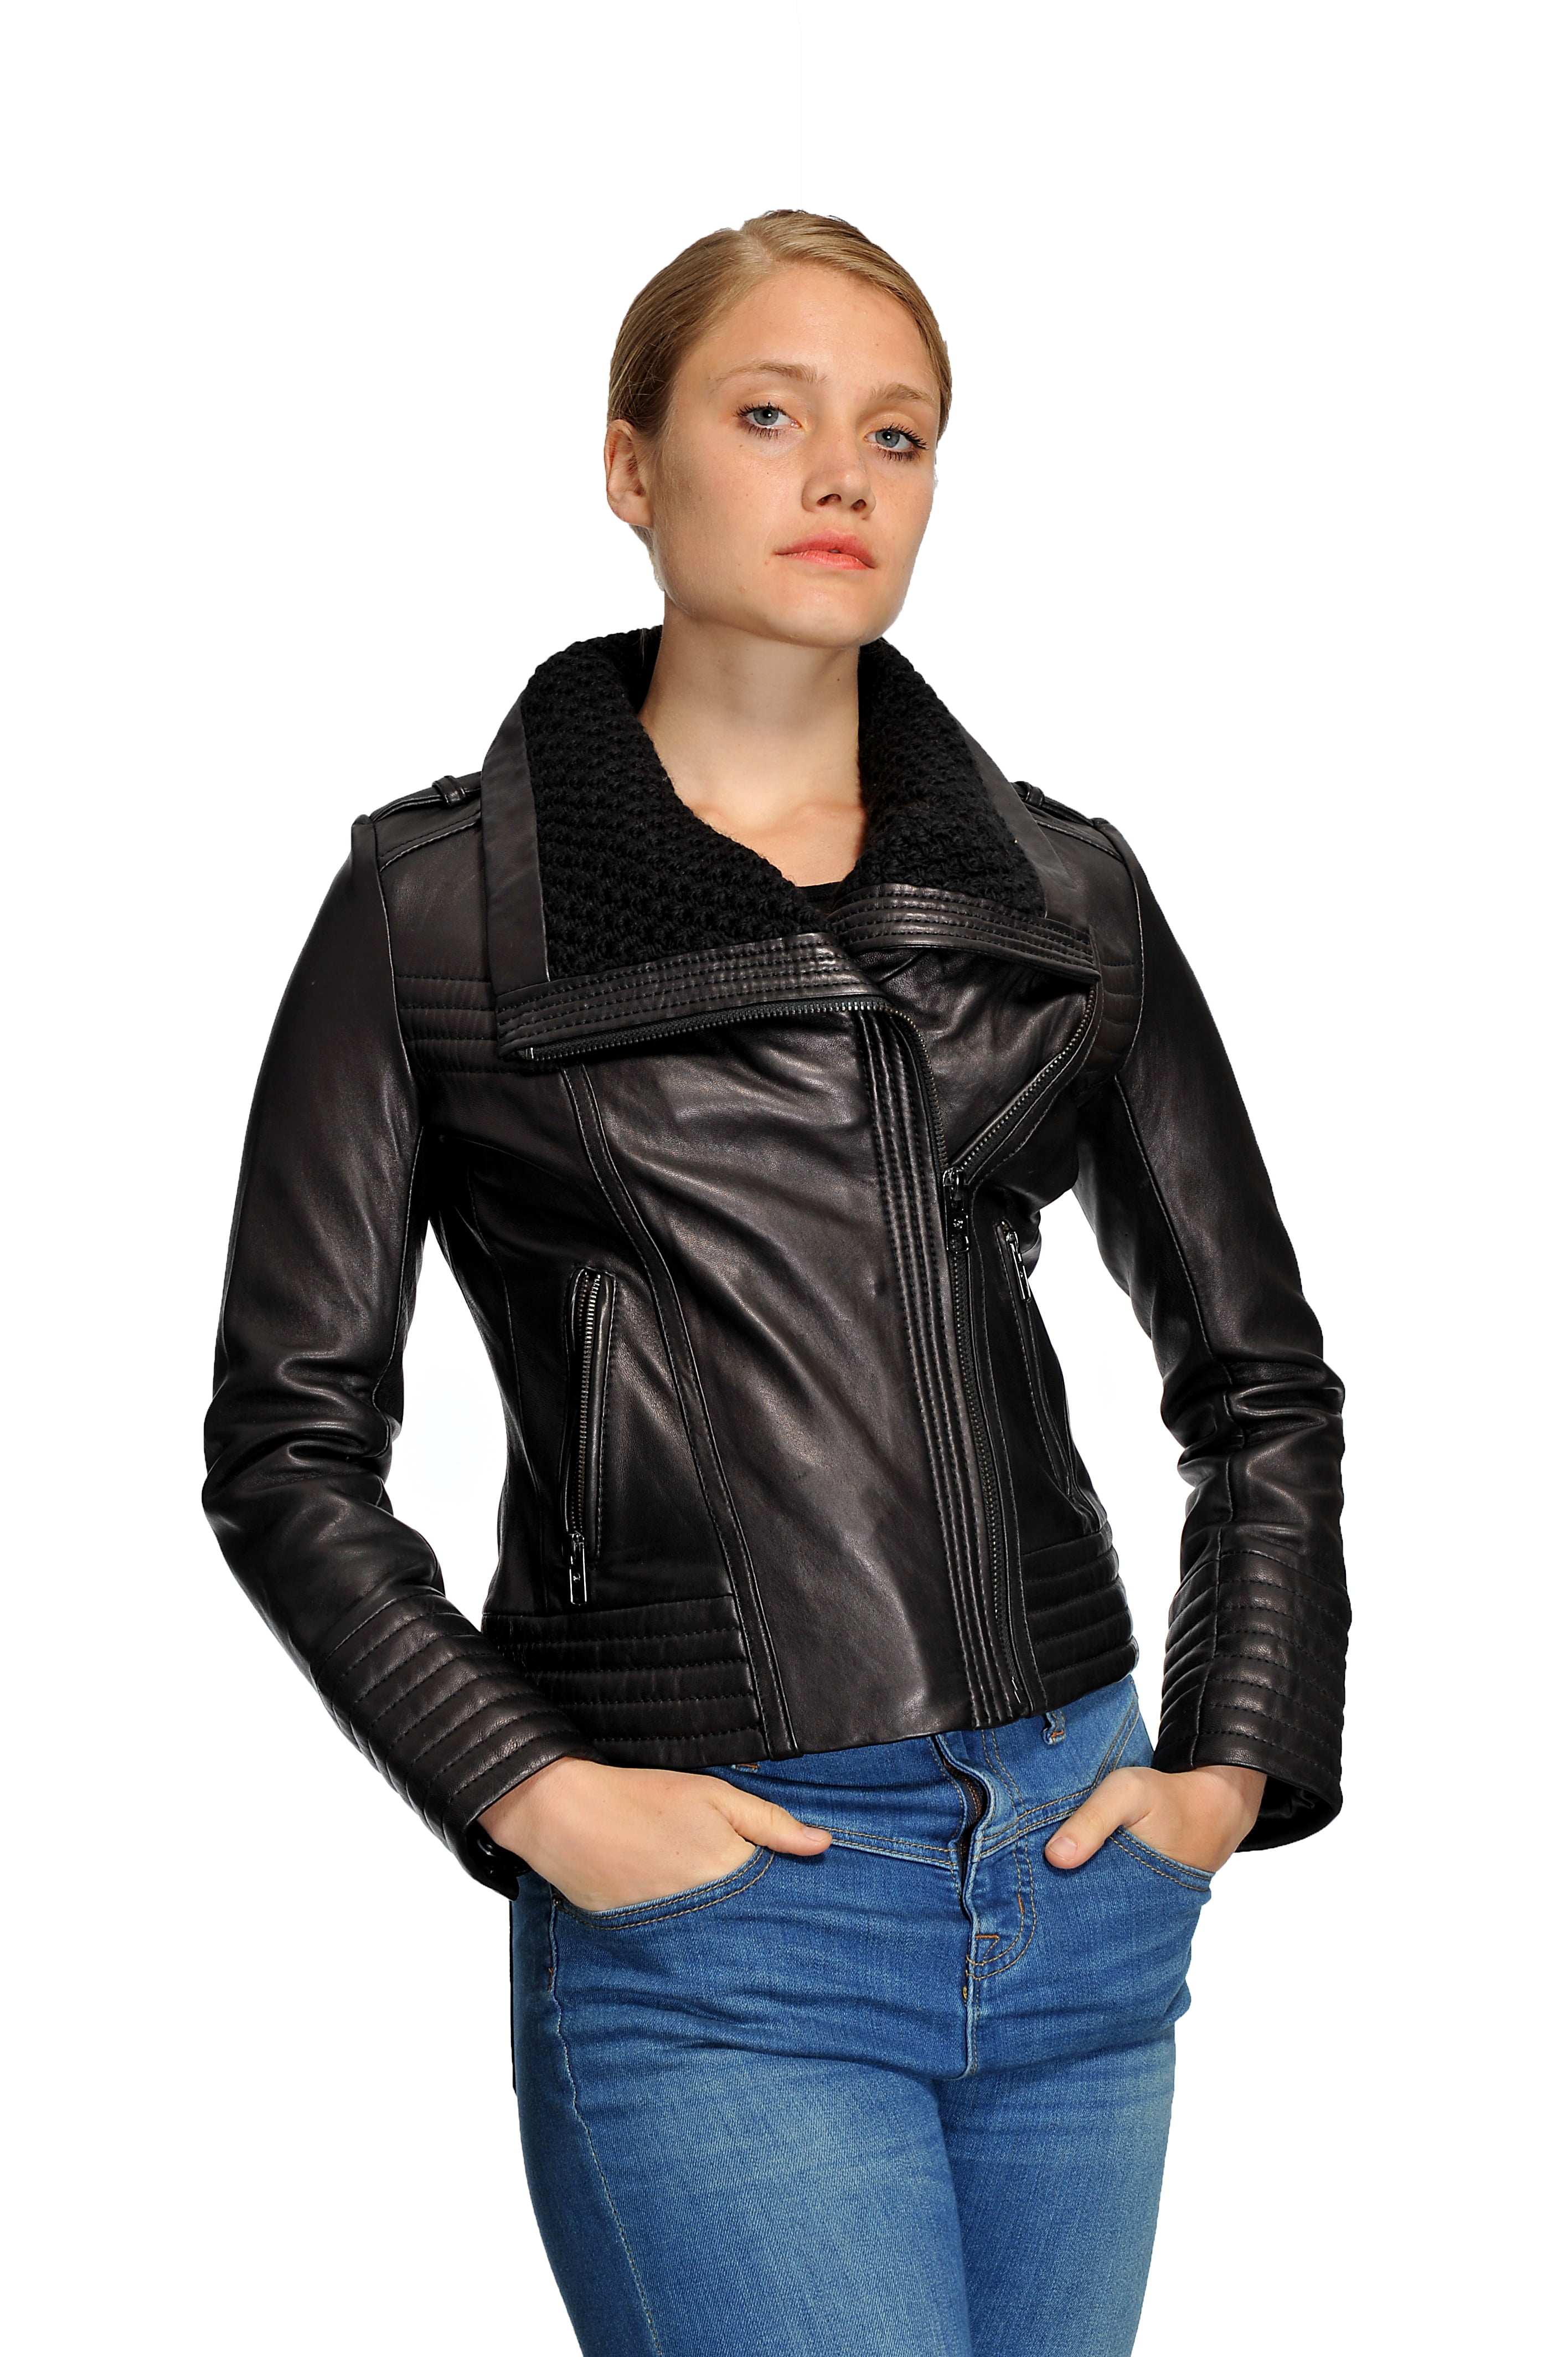 Michael Kors Moto Leather Jacket - Walmart.com